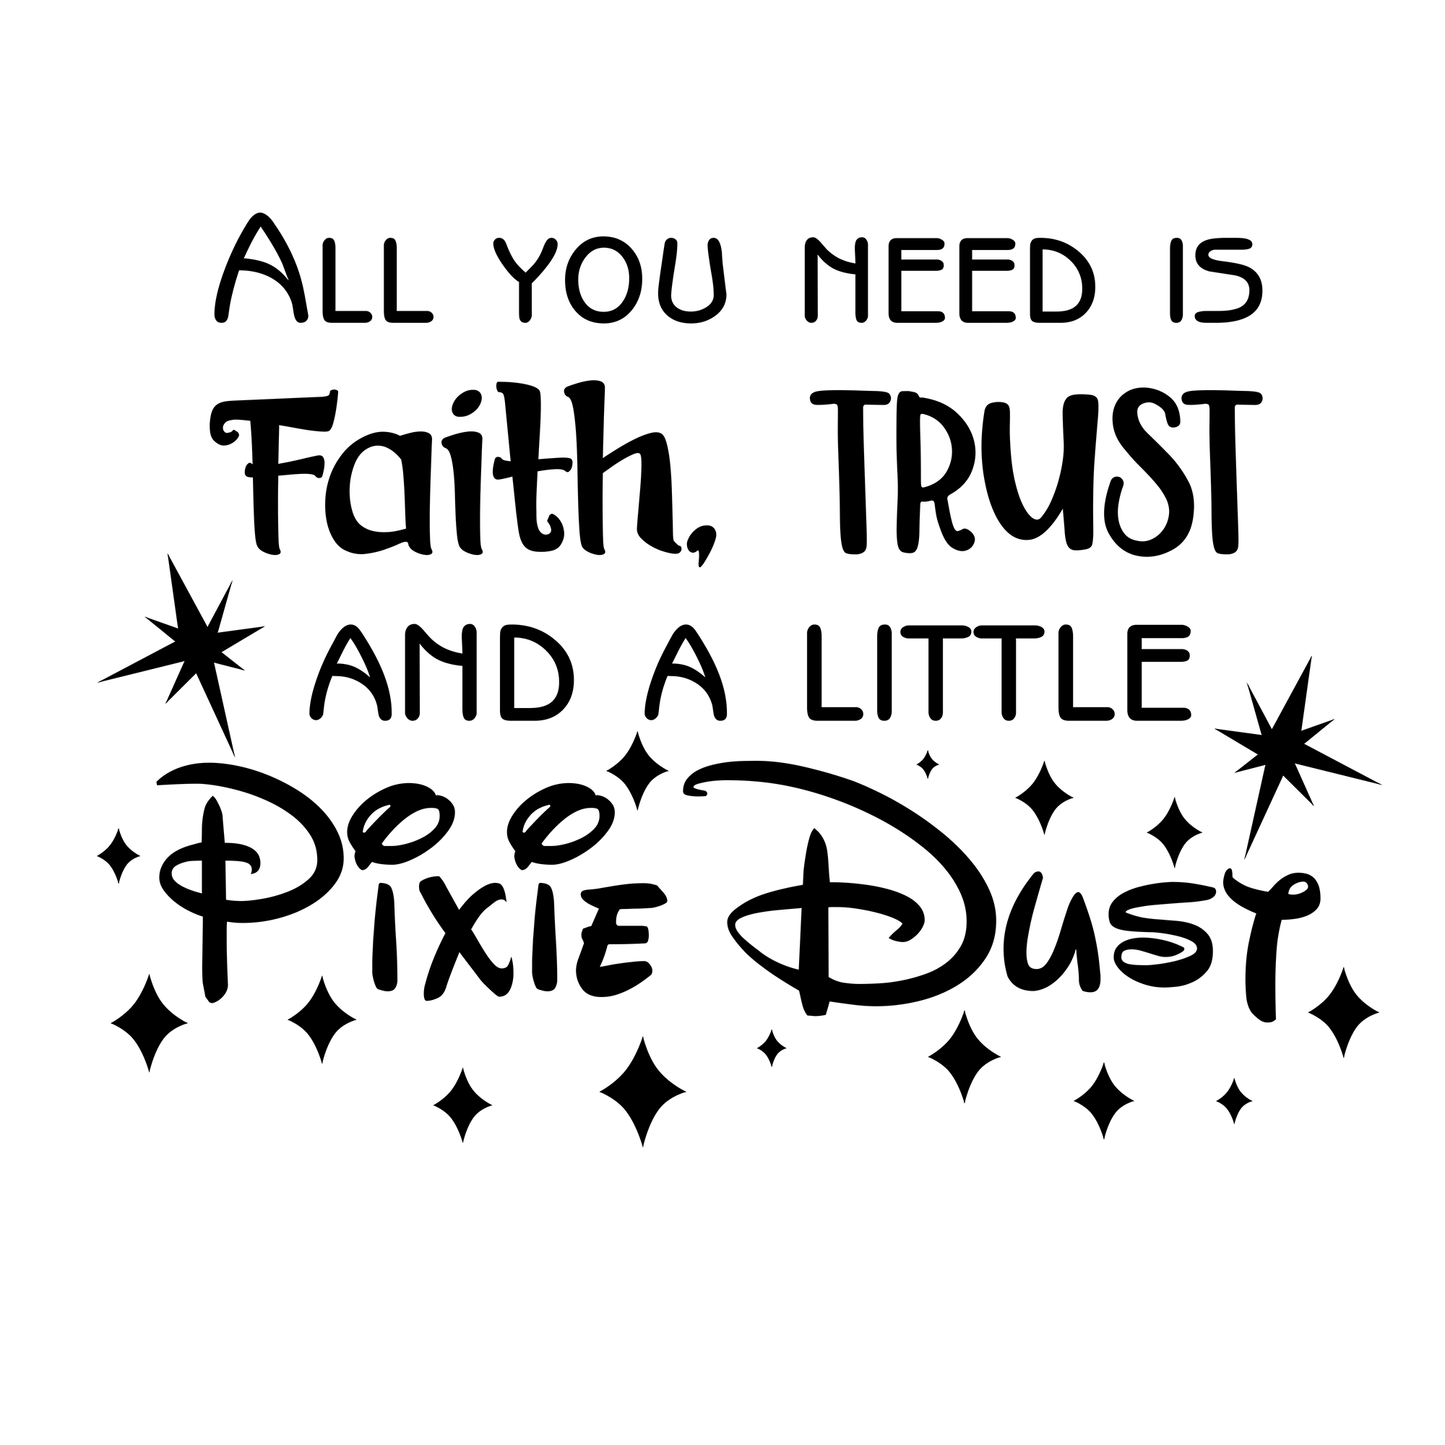 Disney Peter Pan Faith Trust Pixie Dust Vinyl Decal Sticker